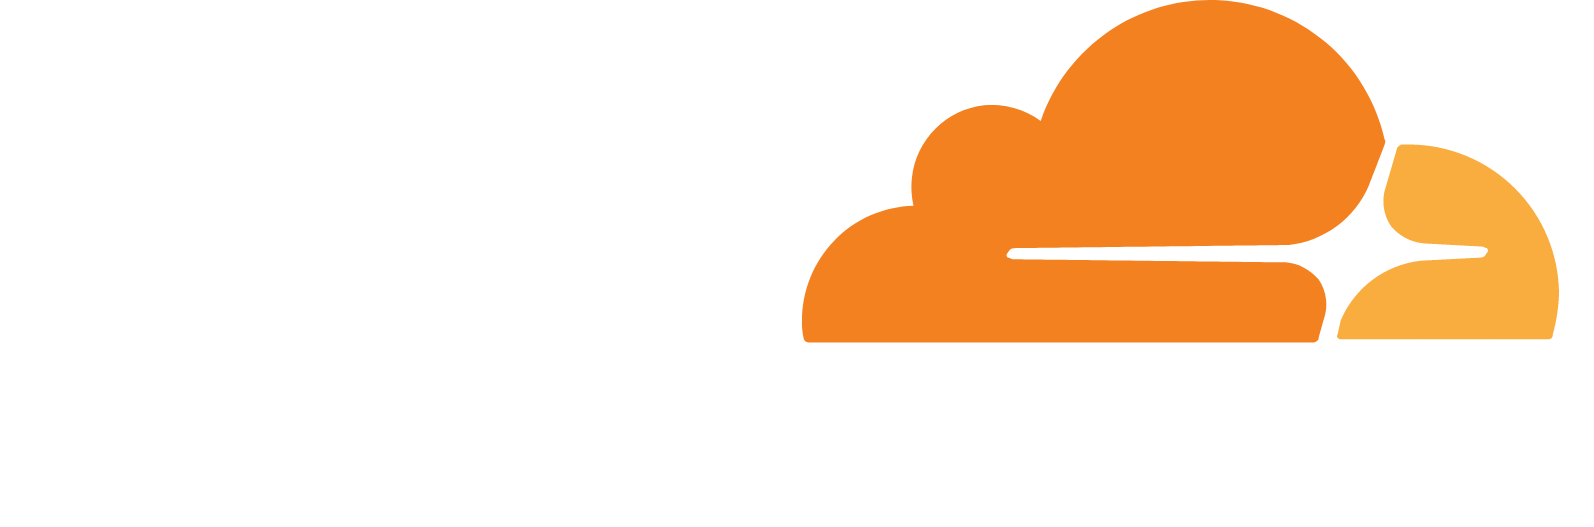 Cloudflare logo large for dark backgrounds (transparent PNG)